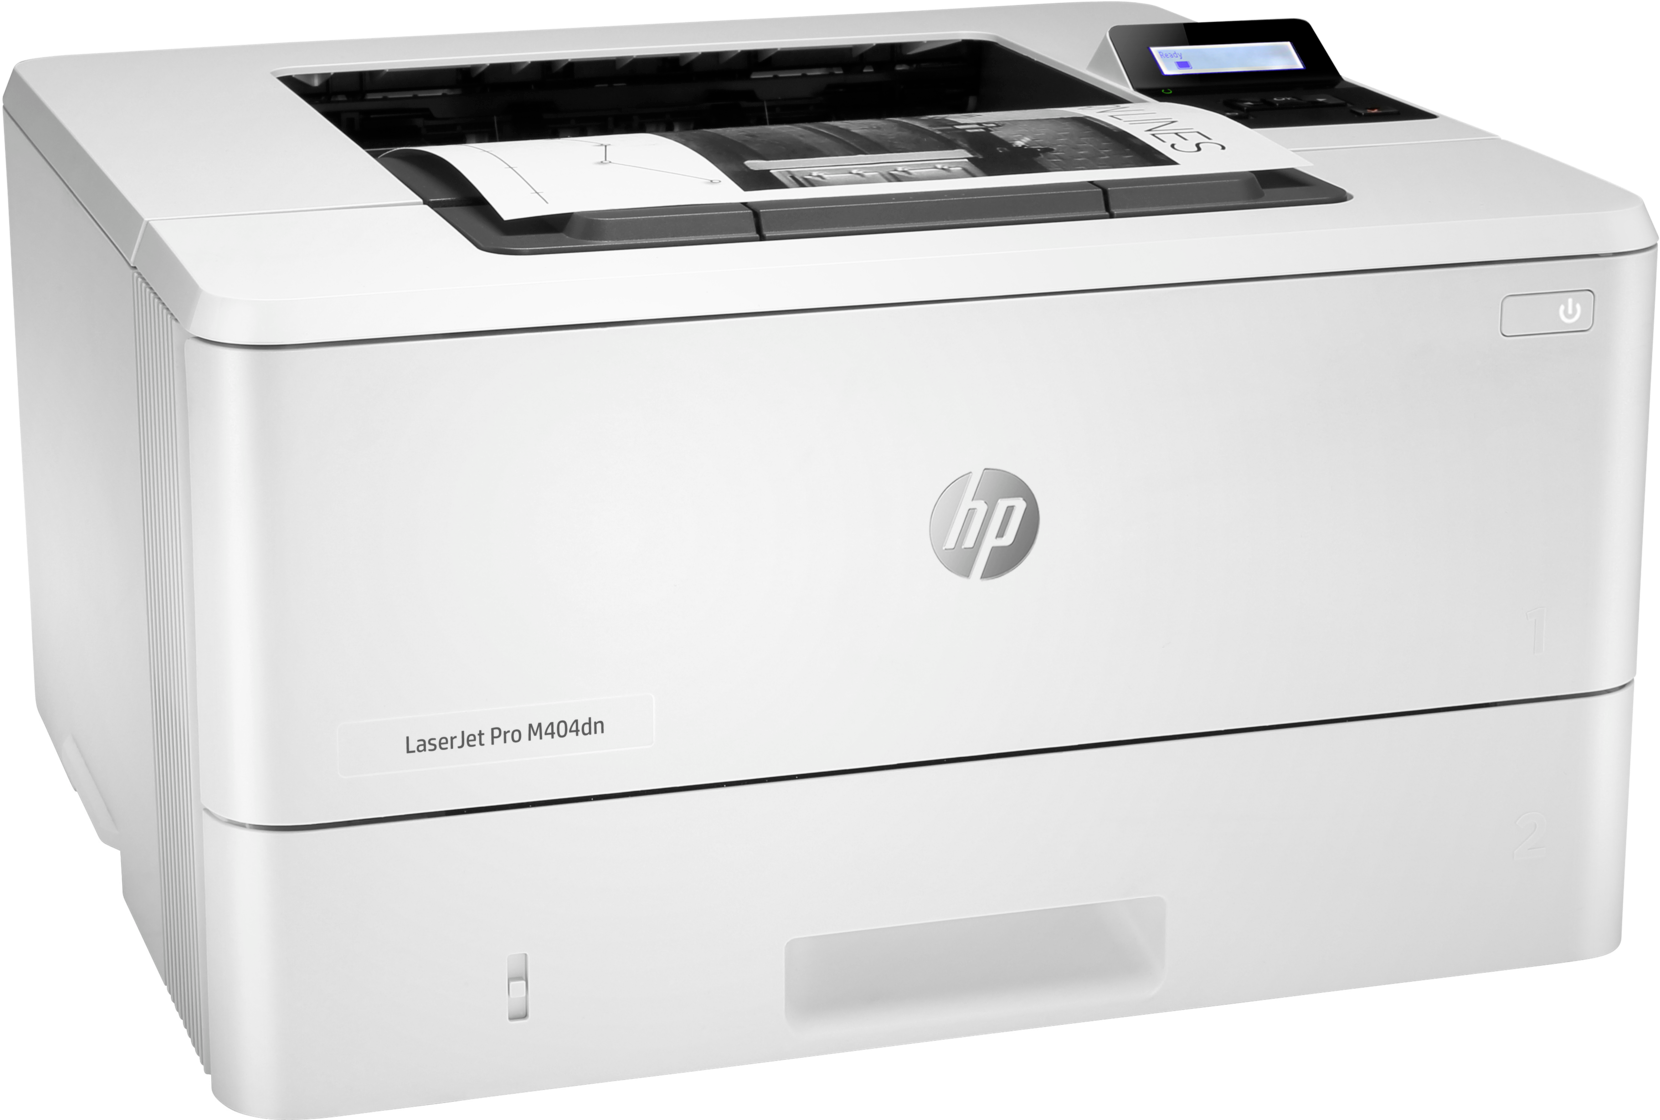 H P Laser Jet Pro M404dn Printer